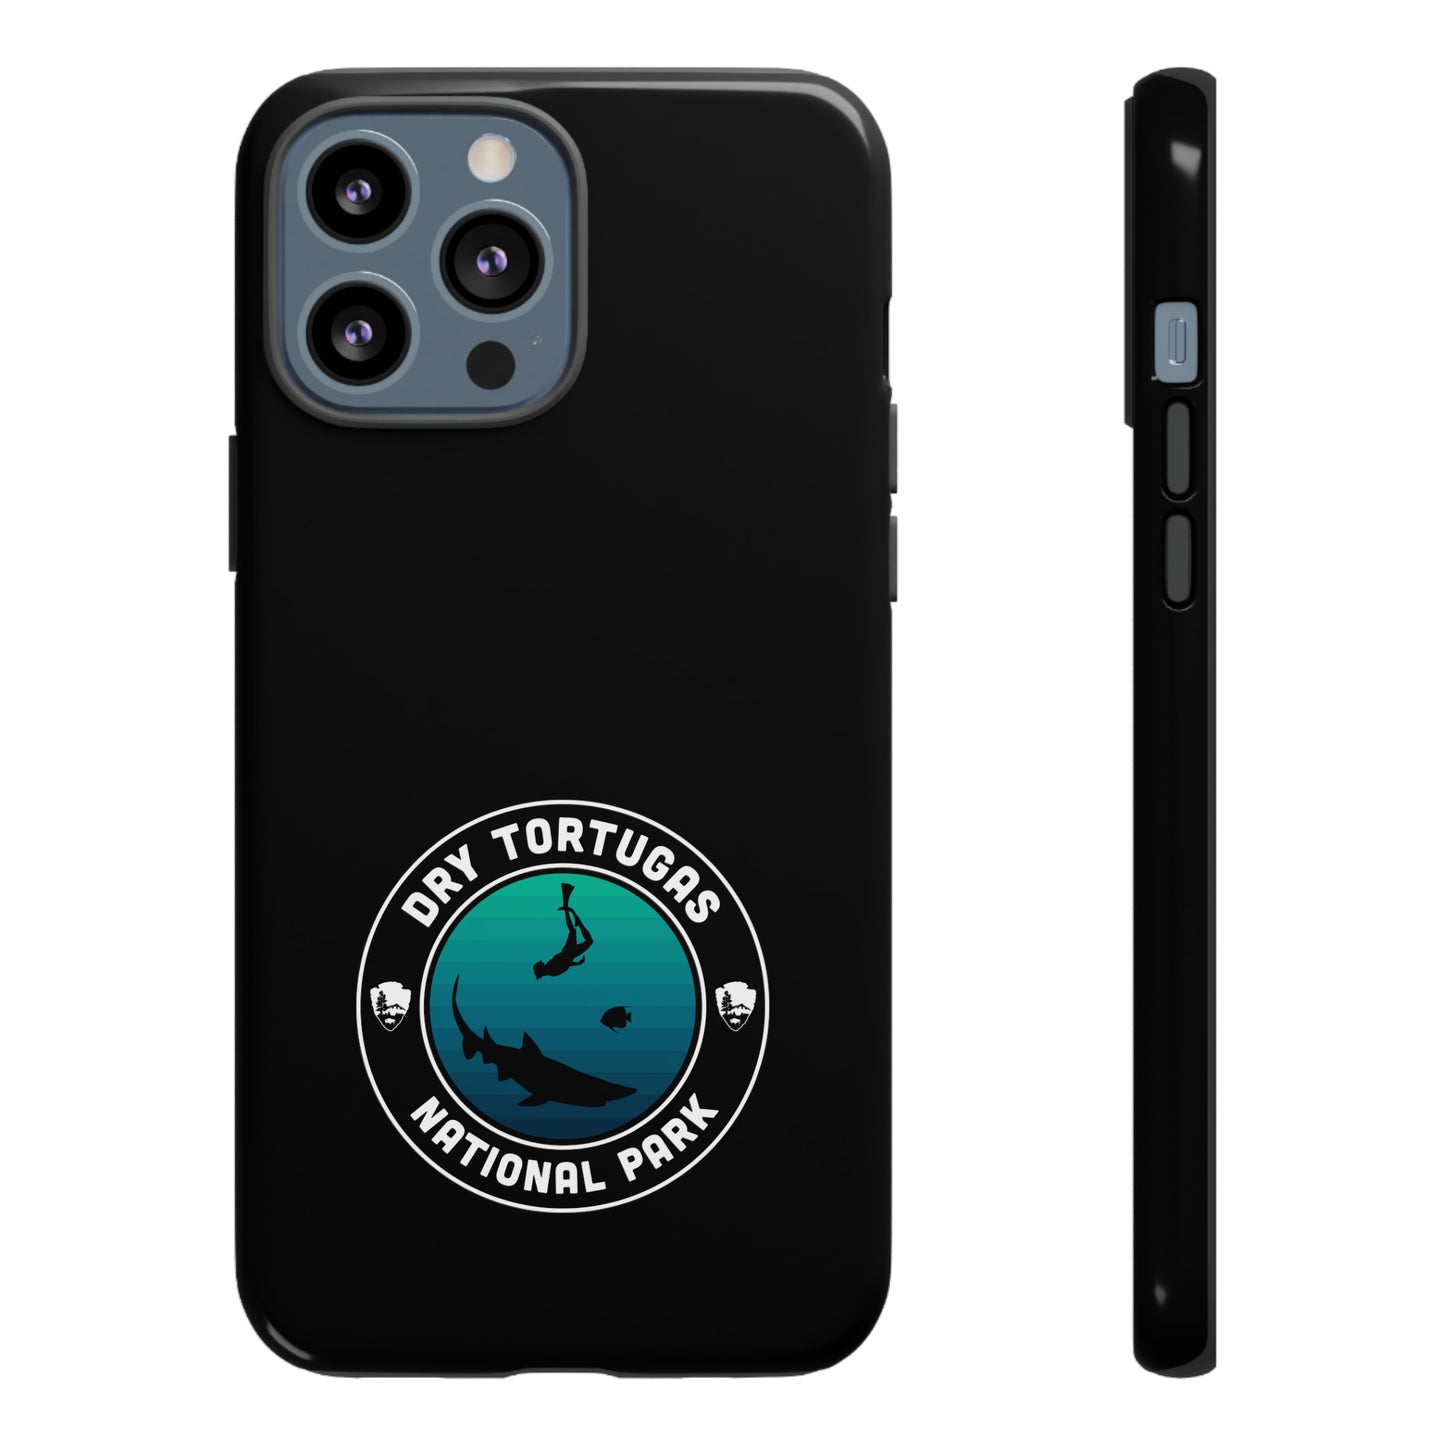 Dry Tortugas National Park Phone Case - Round Emblem Design